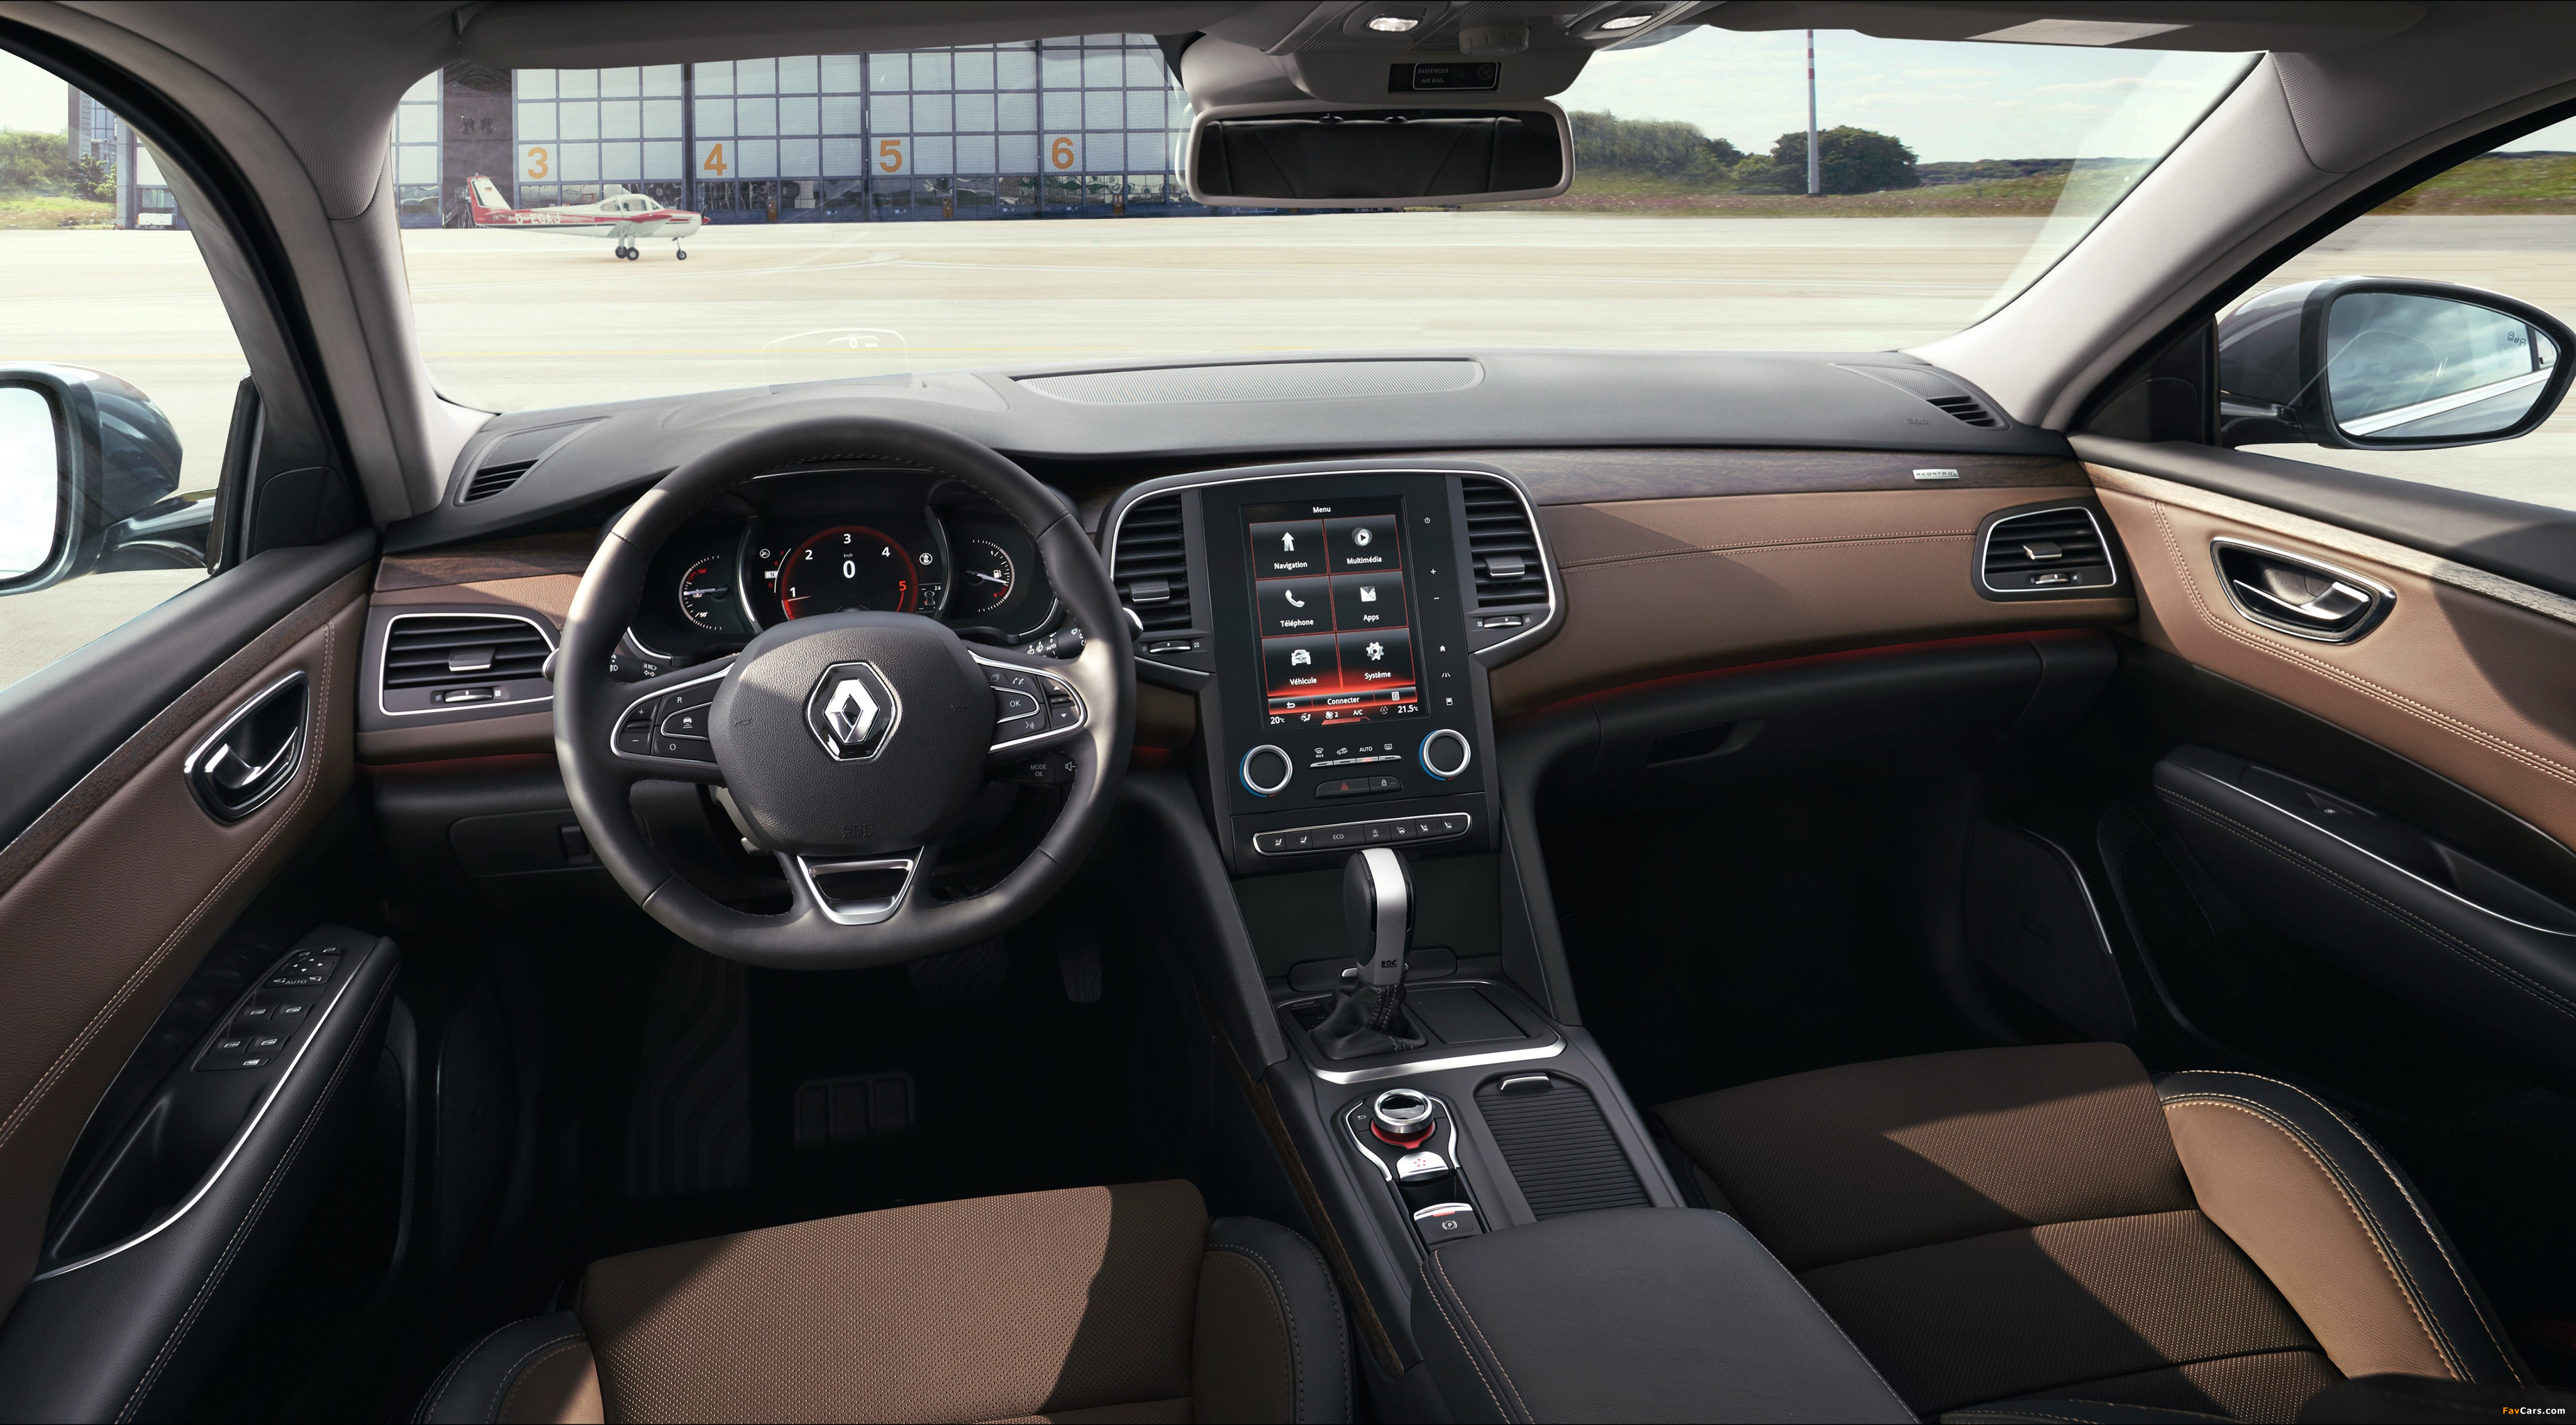 Renault Talisman interior specifications